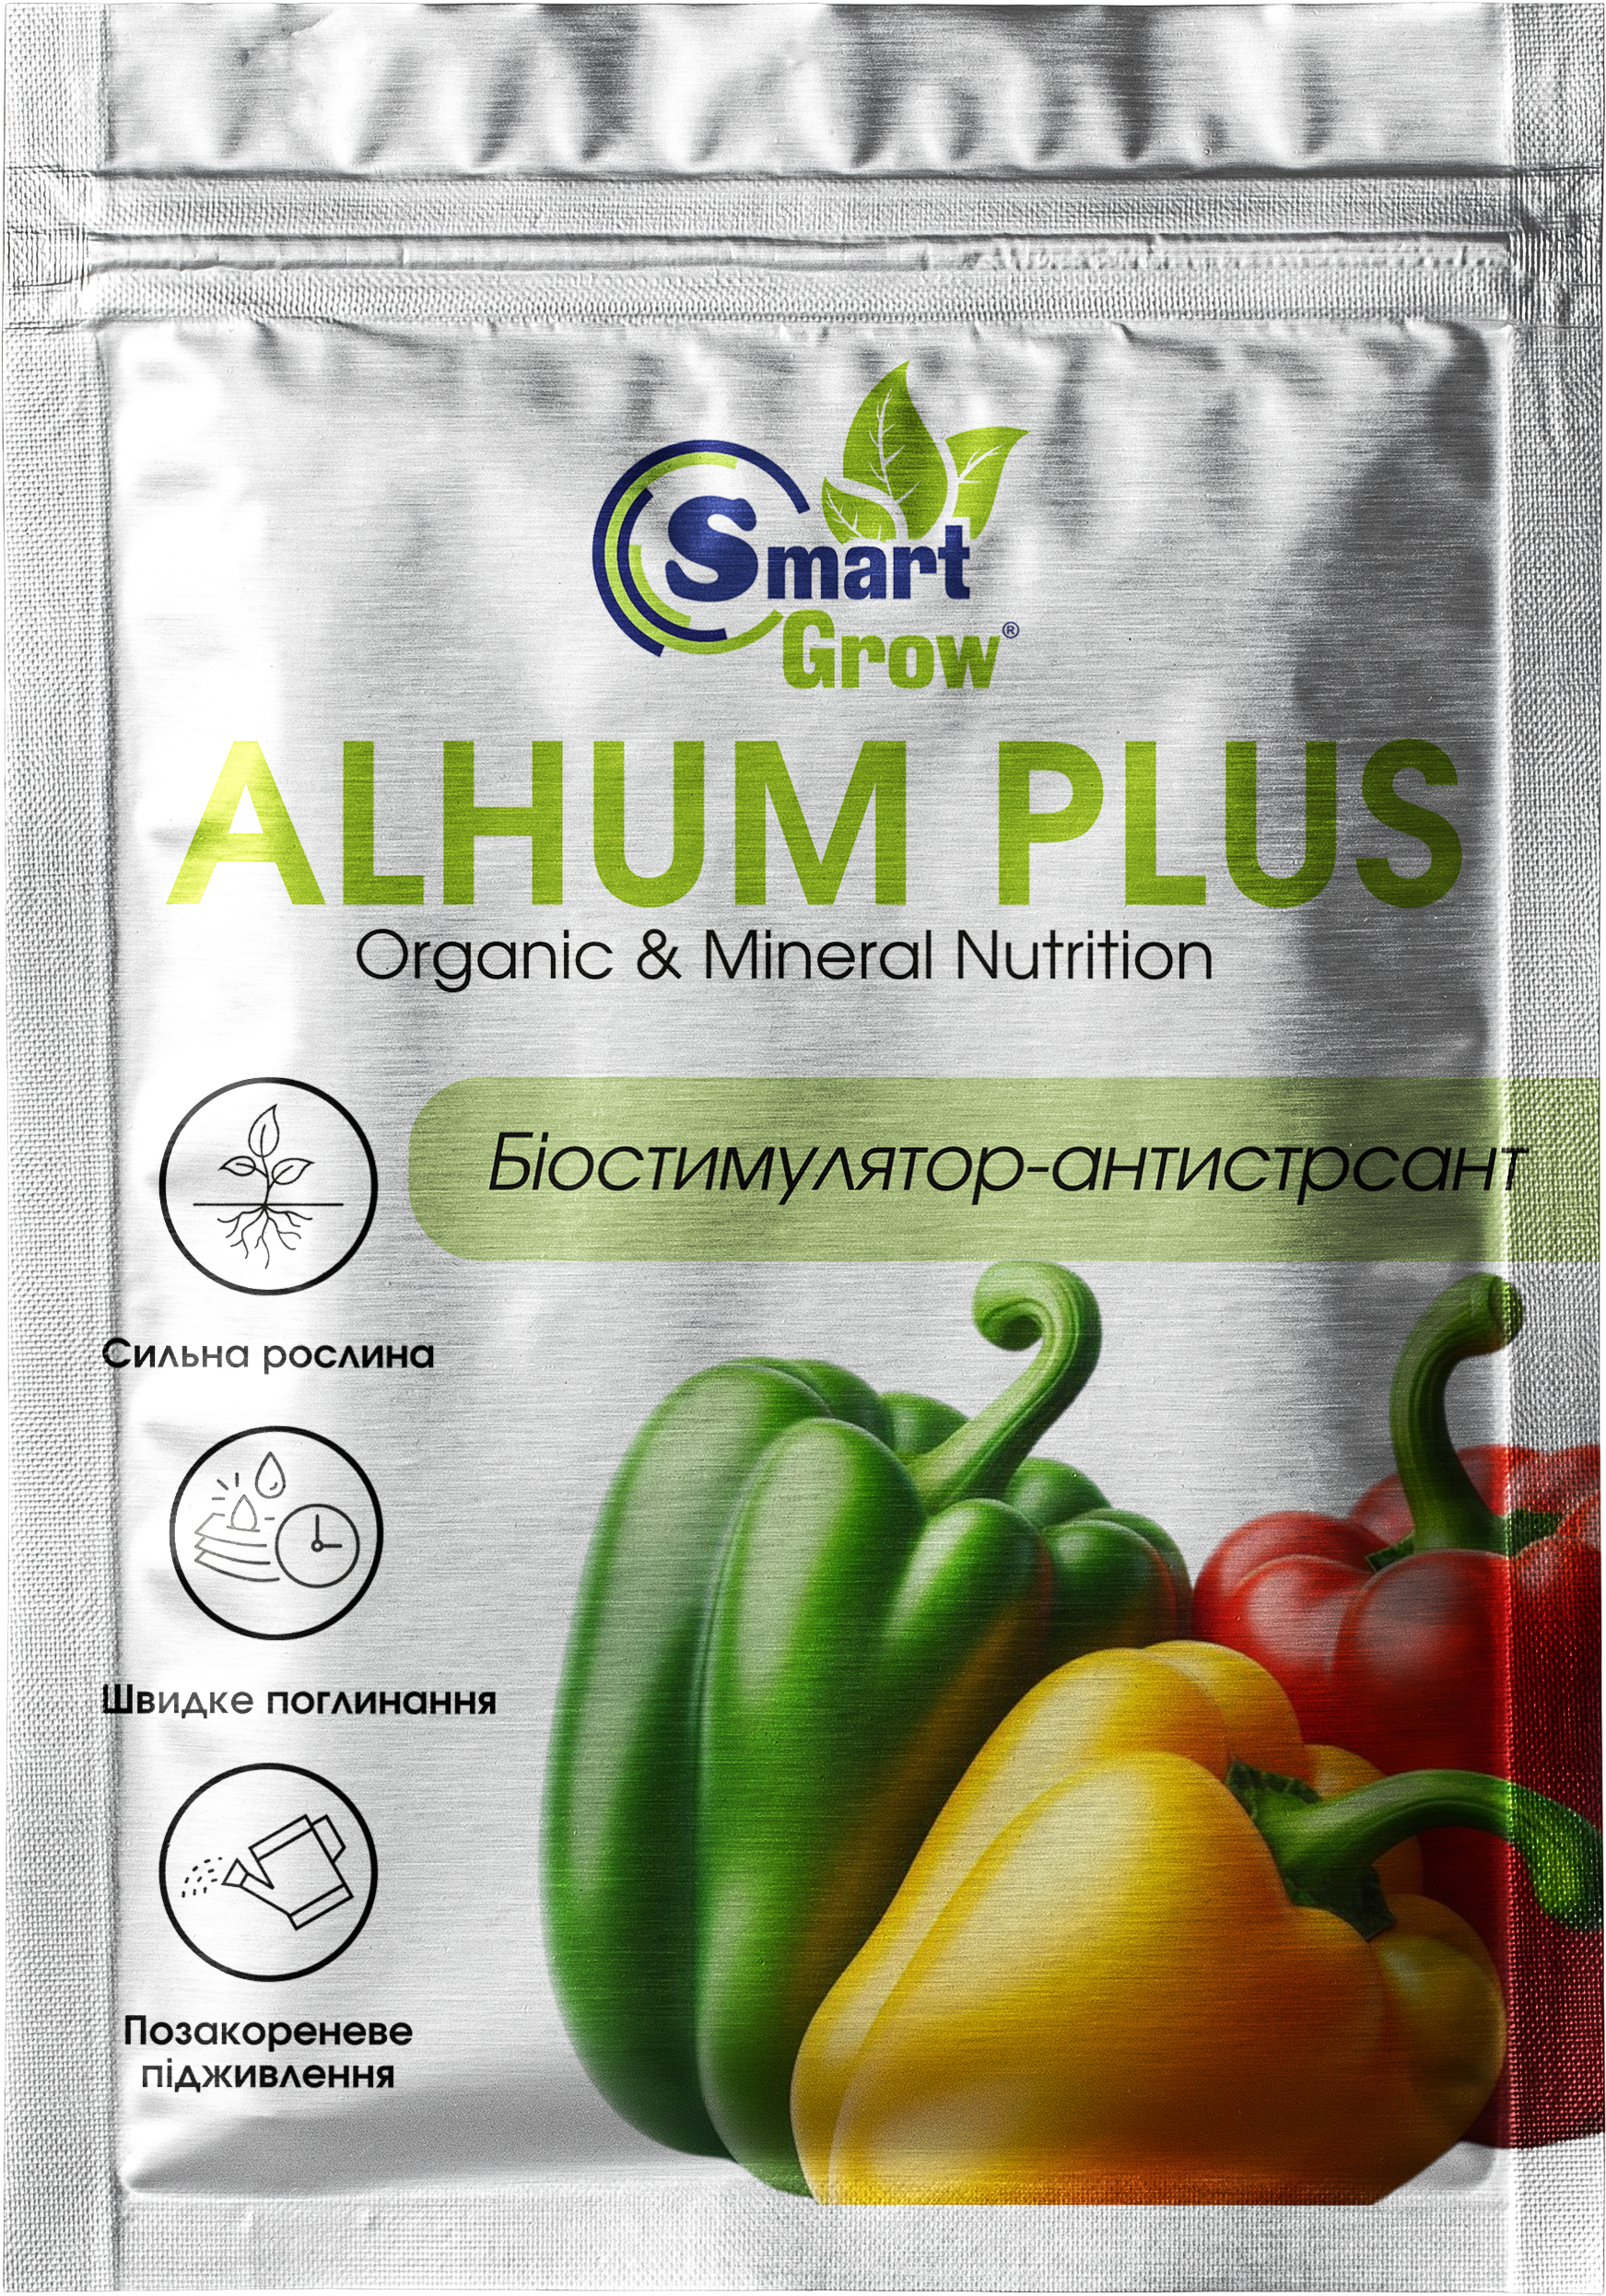 Smart Grow Alhum Plus (Альгум Плюс)